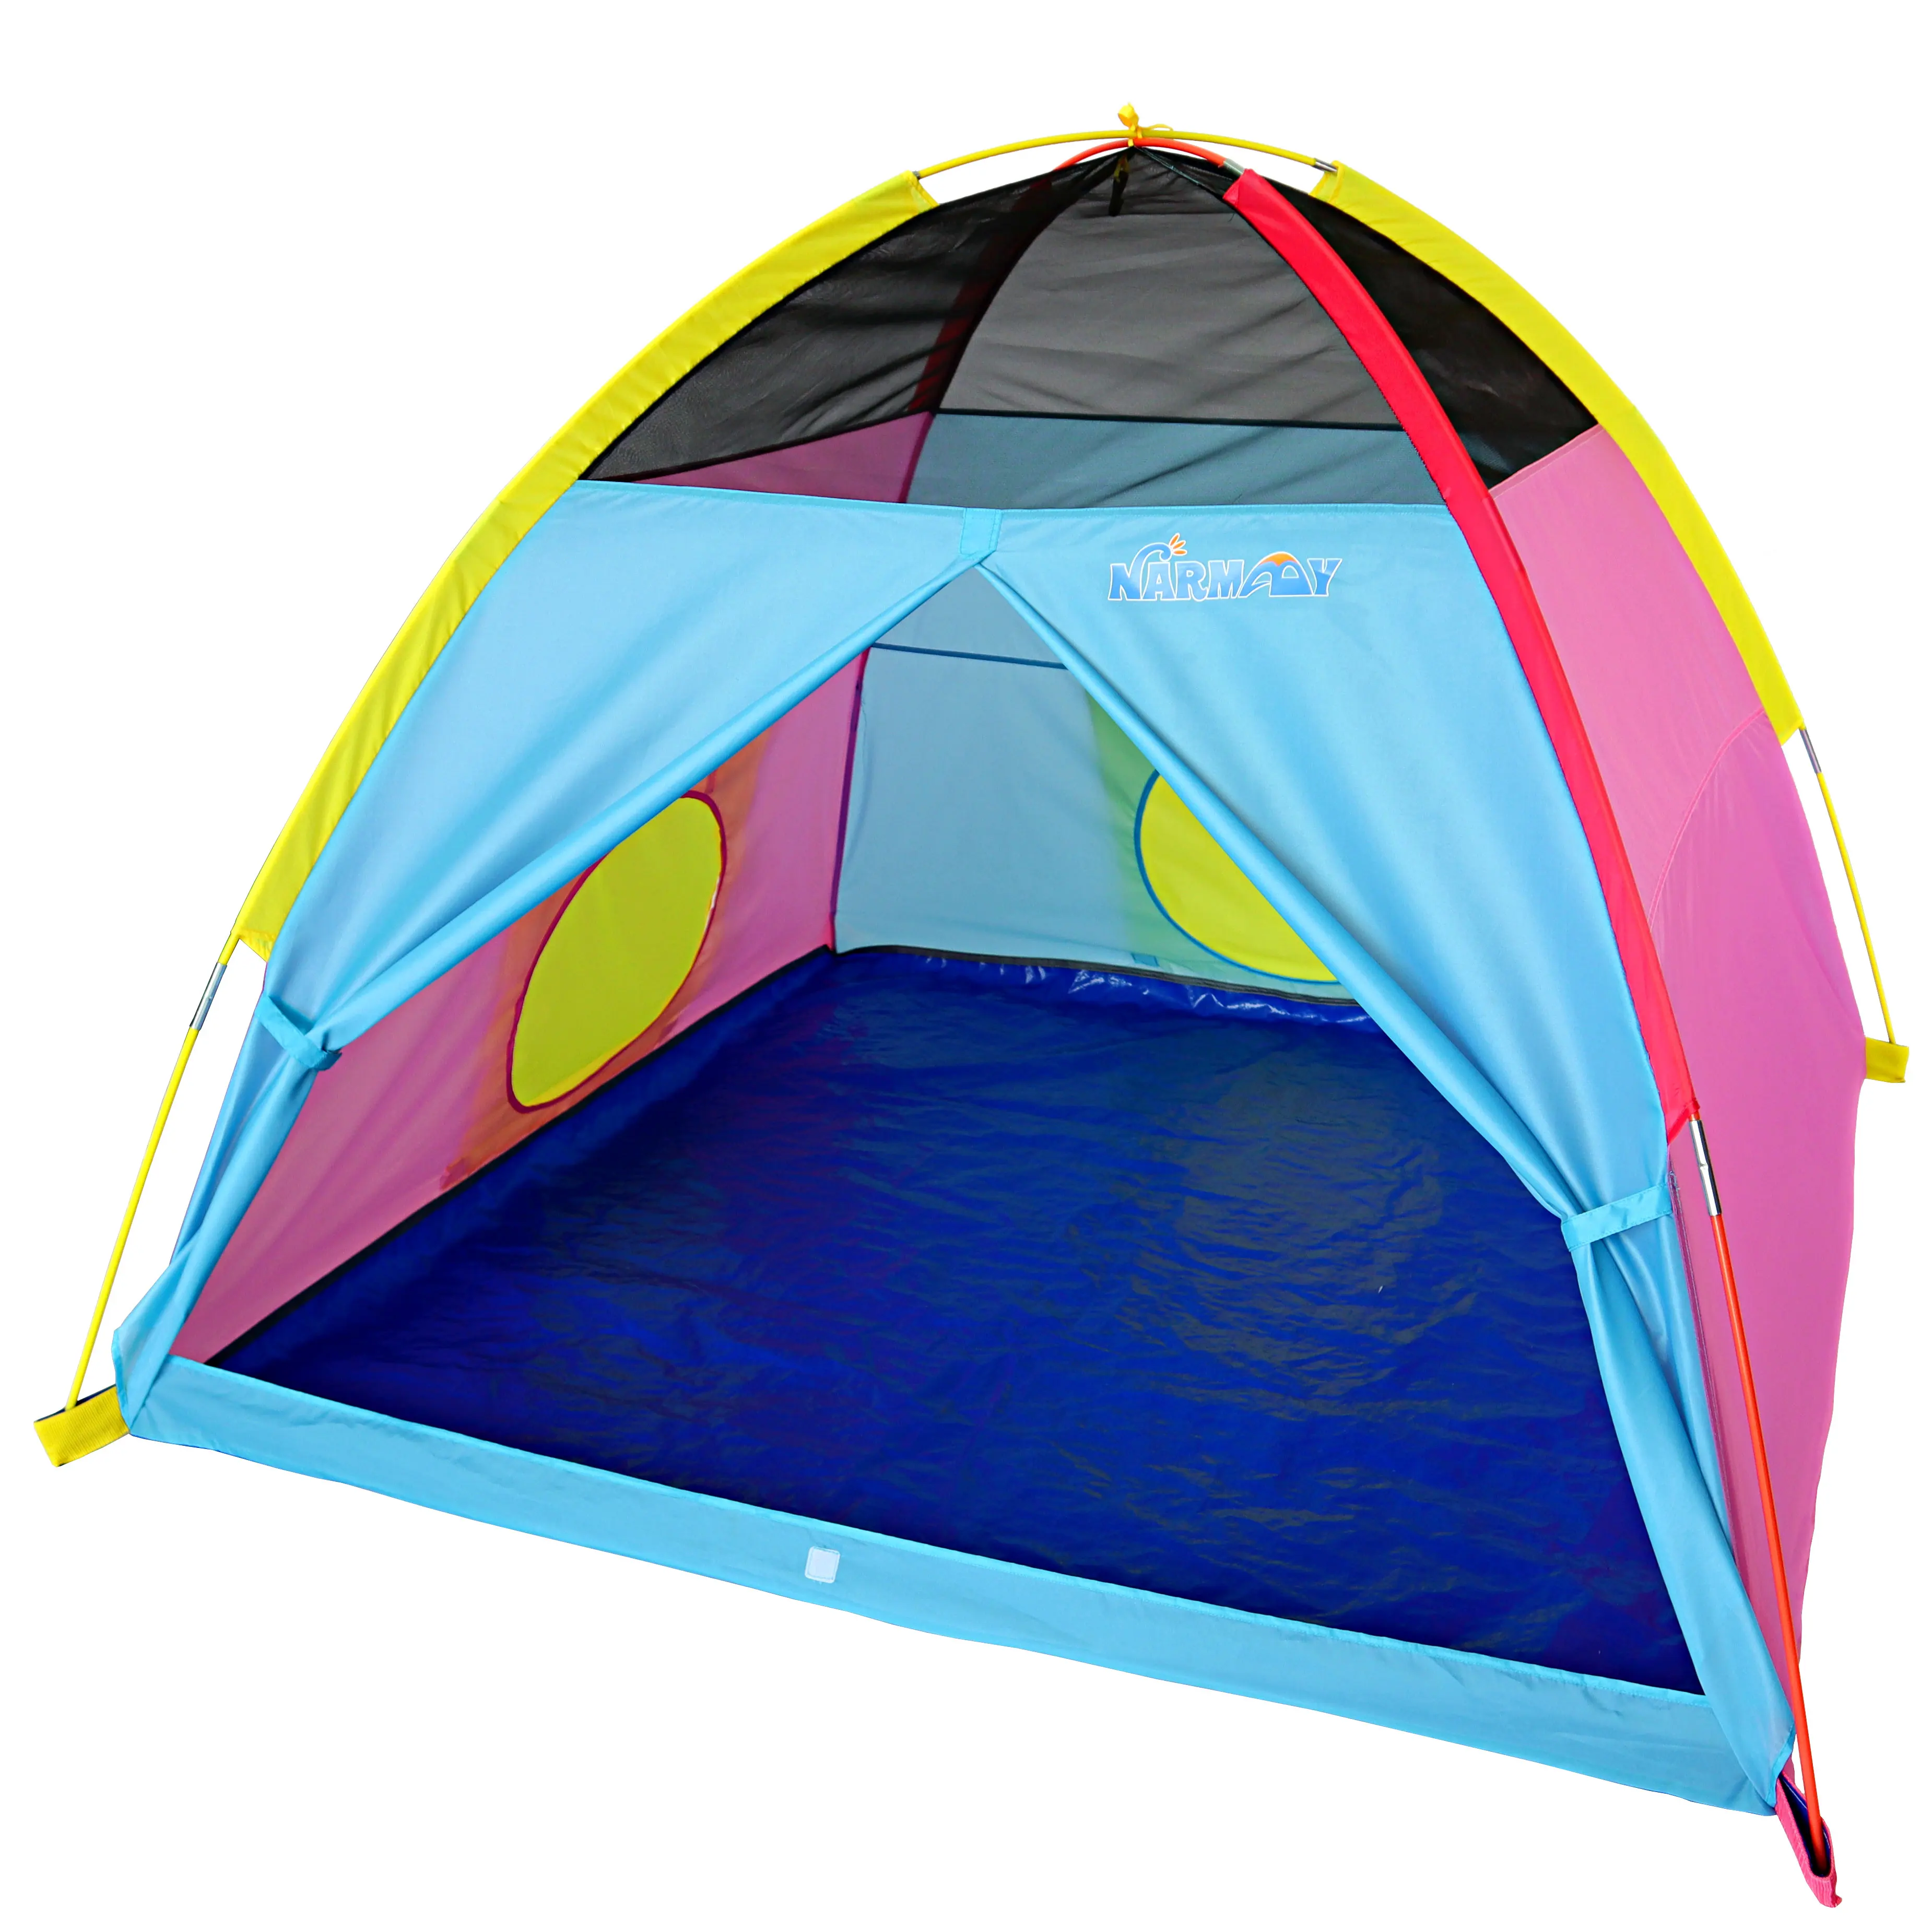 narmay-play-tent-easy-joy-dome-tent-for-kids-indoor-outdoor-fun-152-x-152-x-111-cm